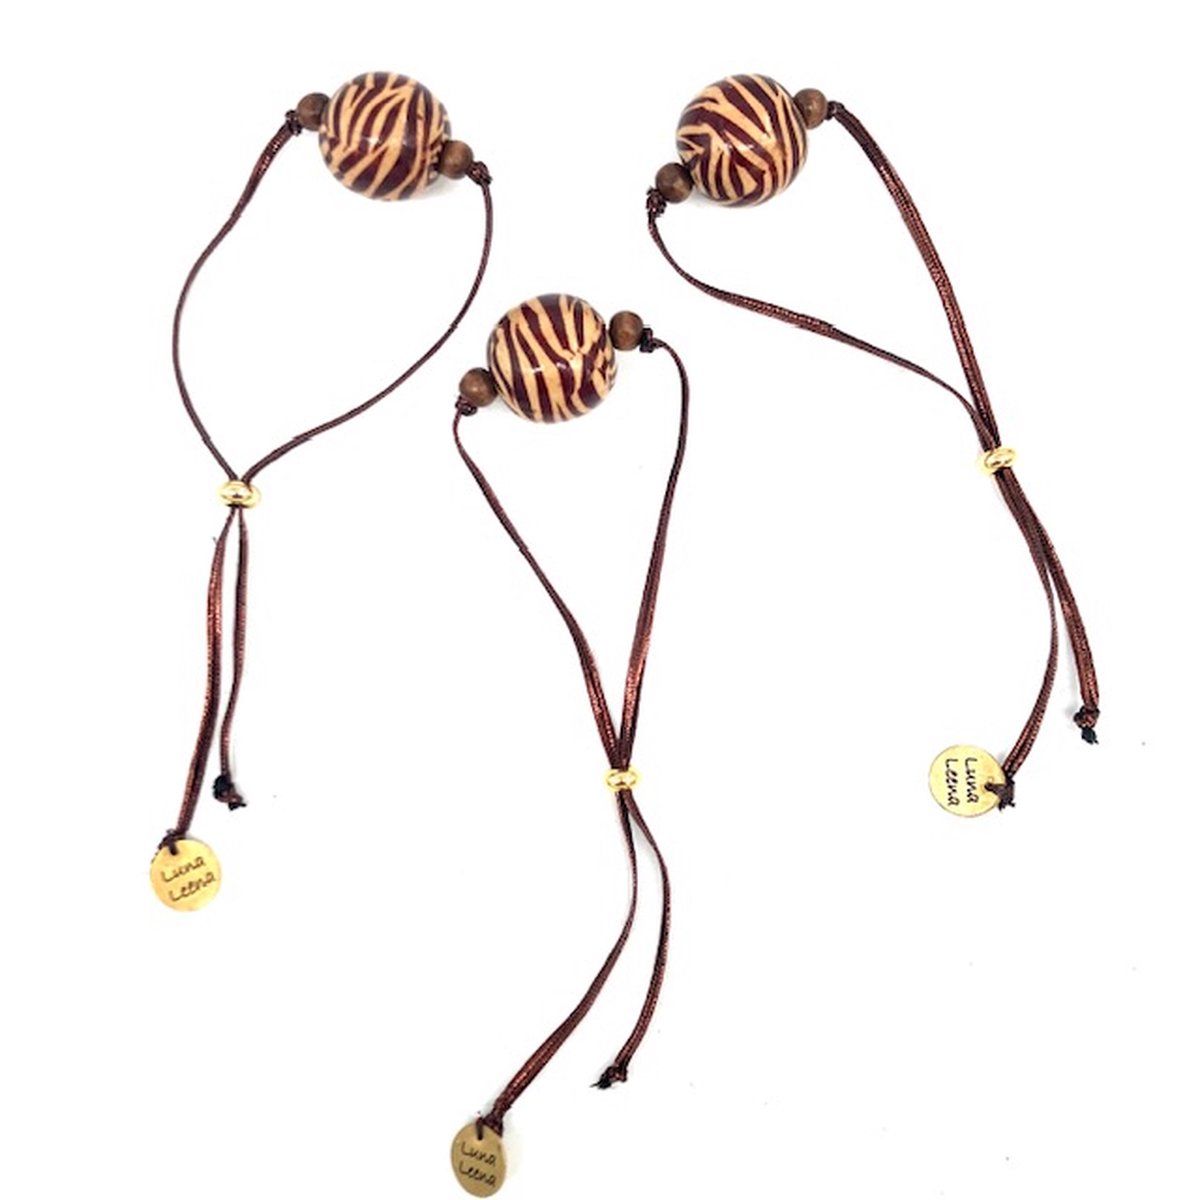 Luna-Leena duurzame armband luipaard bruin - L26cm - gerecycled - houten kralen van bestaande armbanden uit Nepal - one size - handgemaakt in Nepal - bracelet brown - trendy - feestje - voor elke dag - vintage look - accessoire - cadeau - sieraad